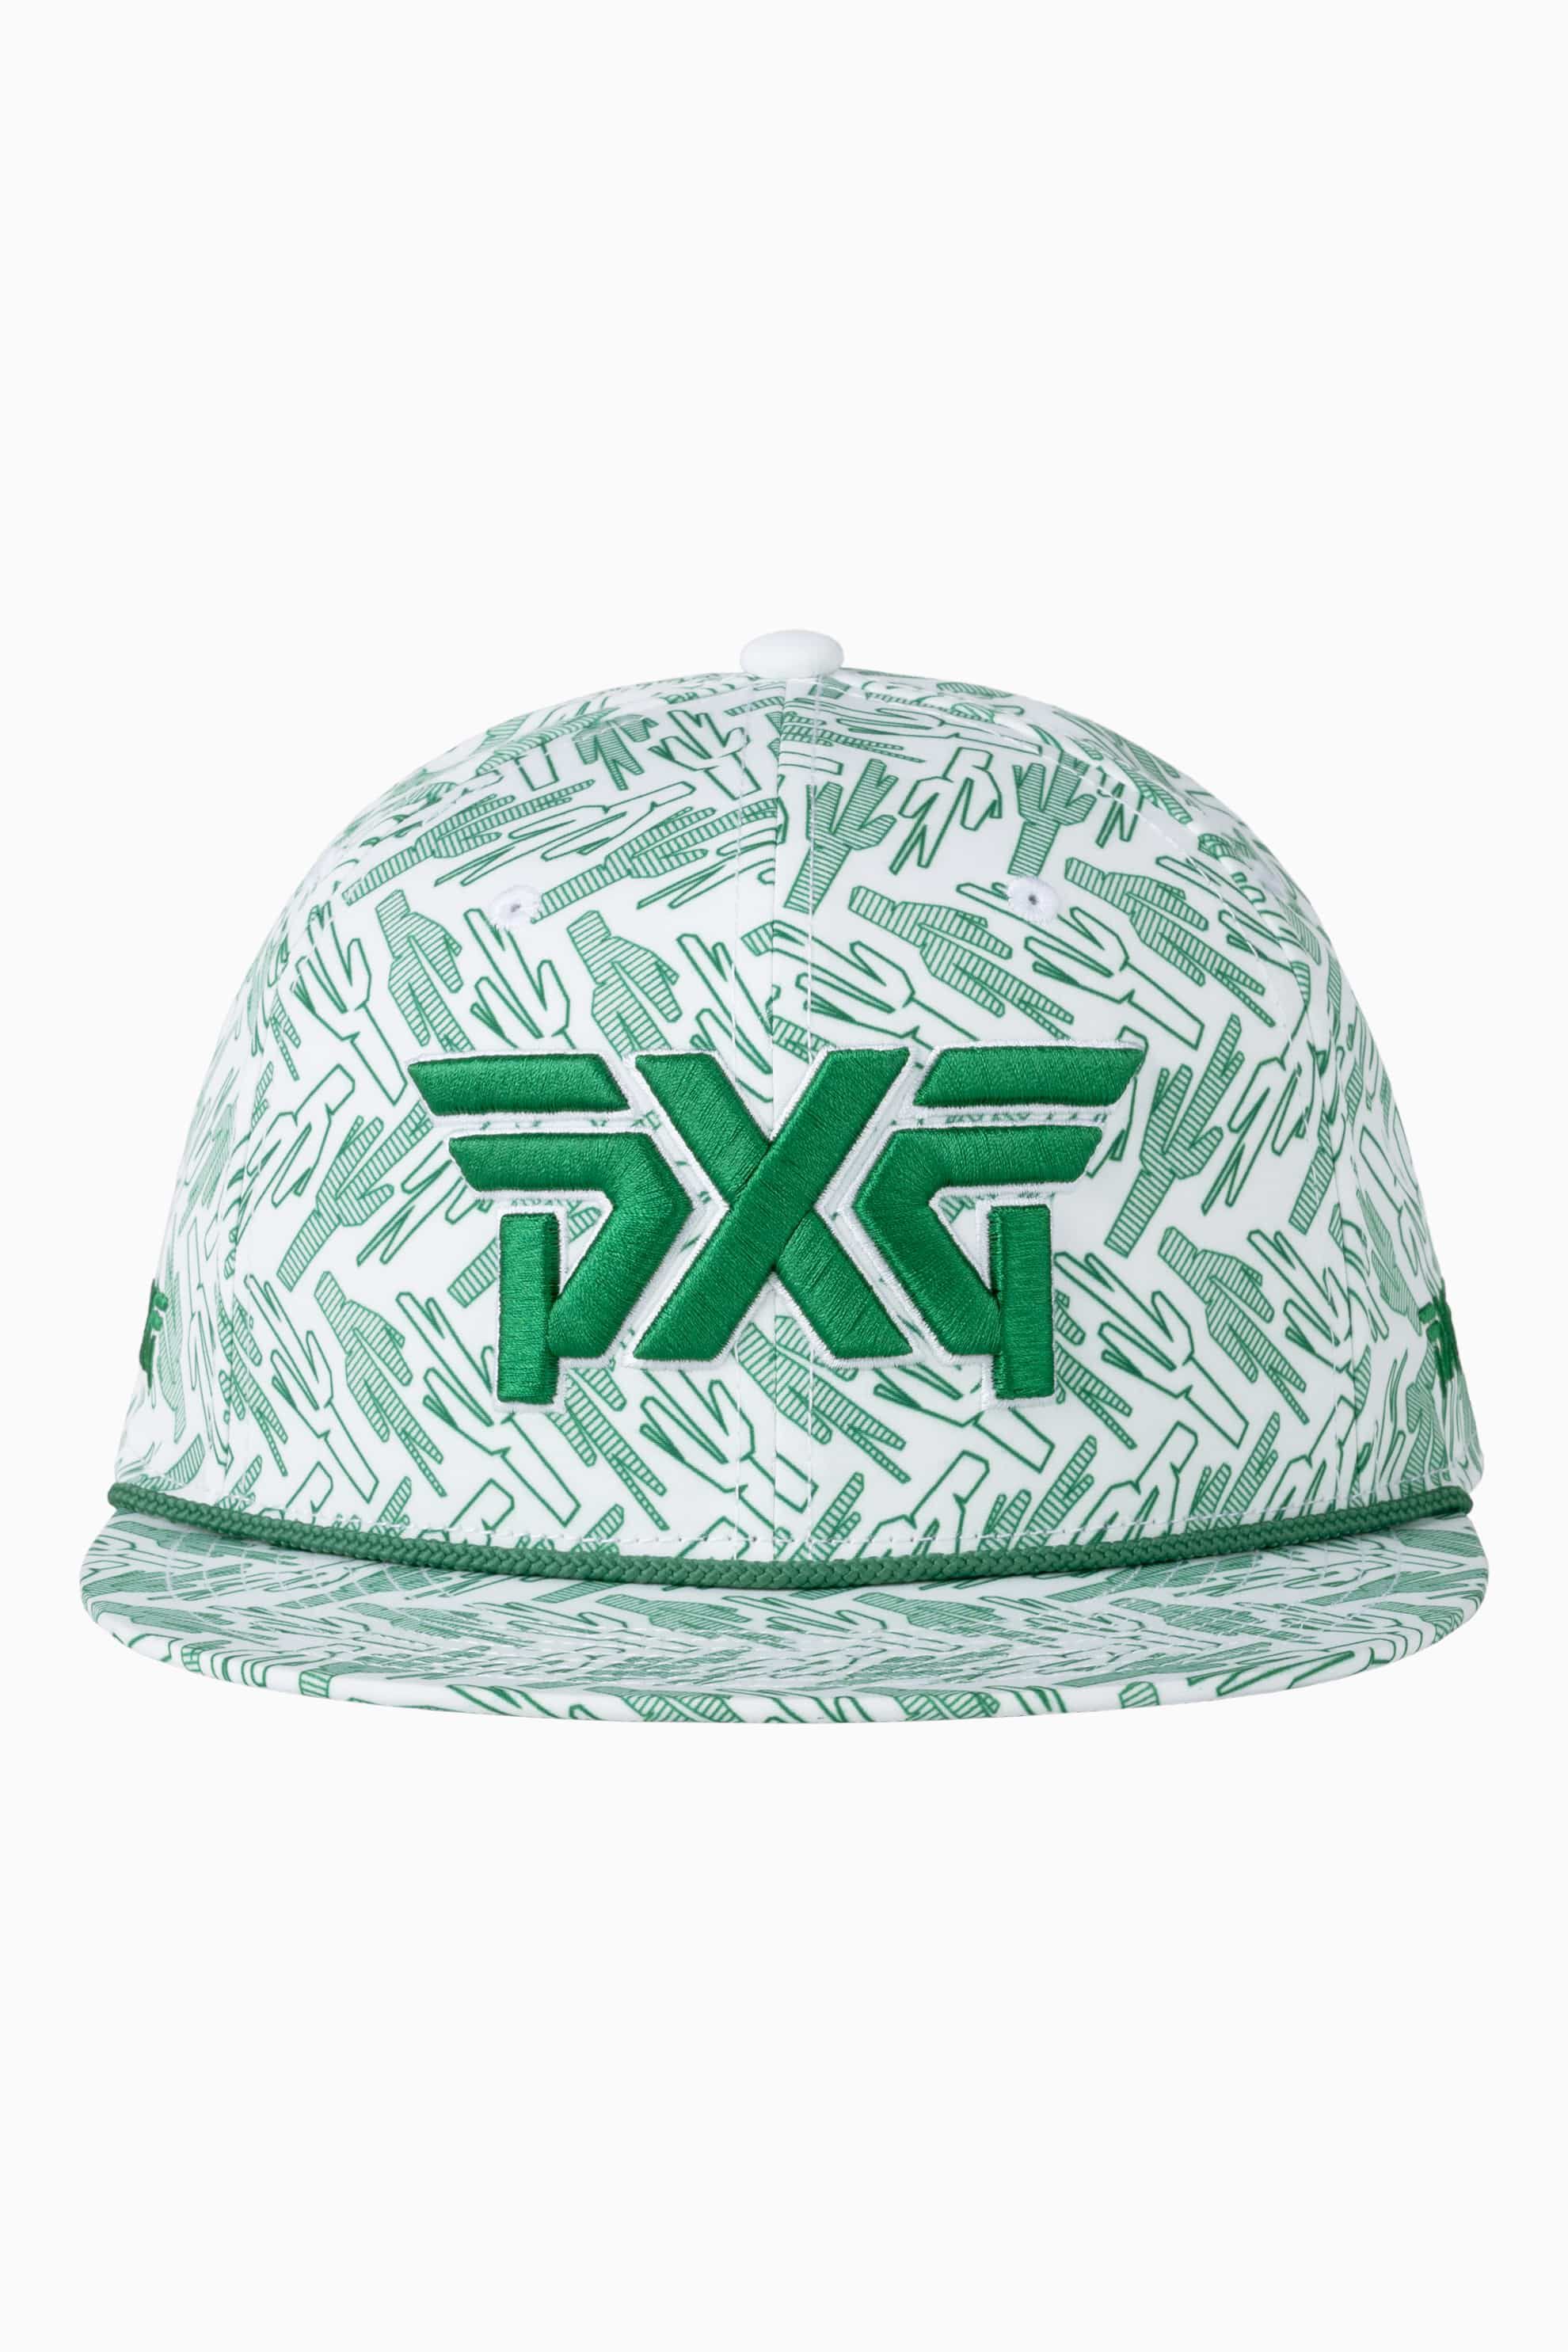 Shop PXG Golf Caps - for Men and Women | PXG